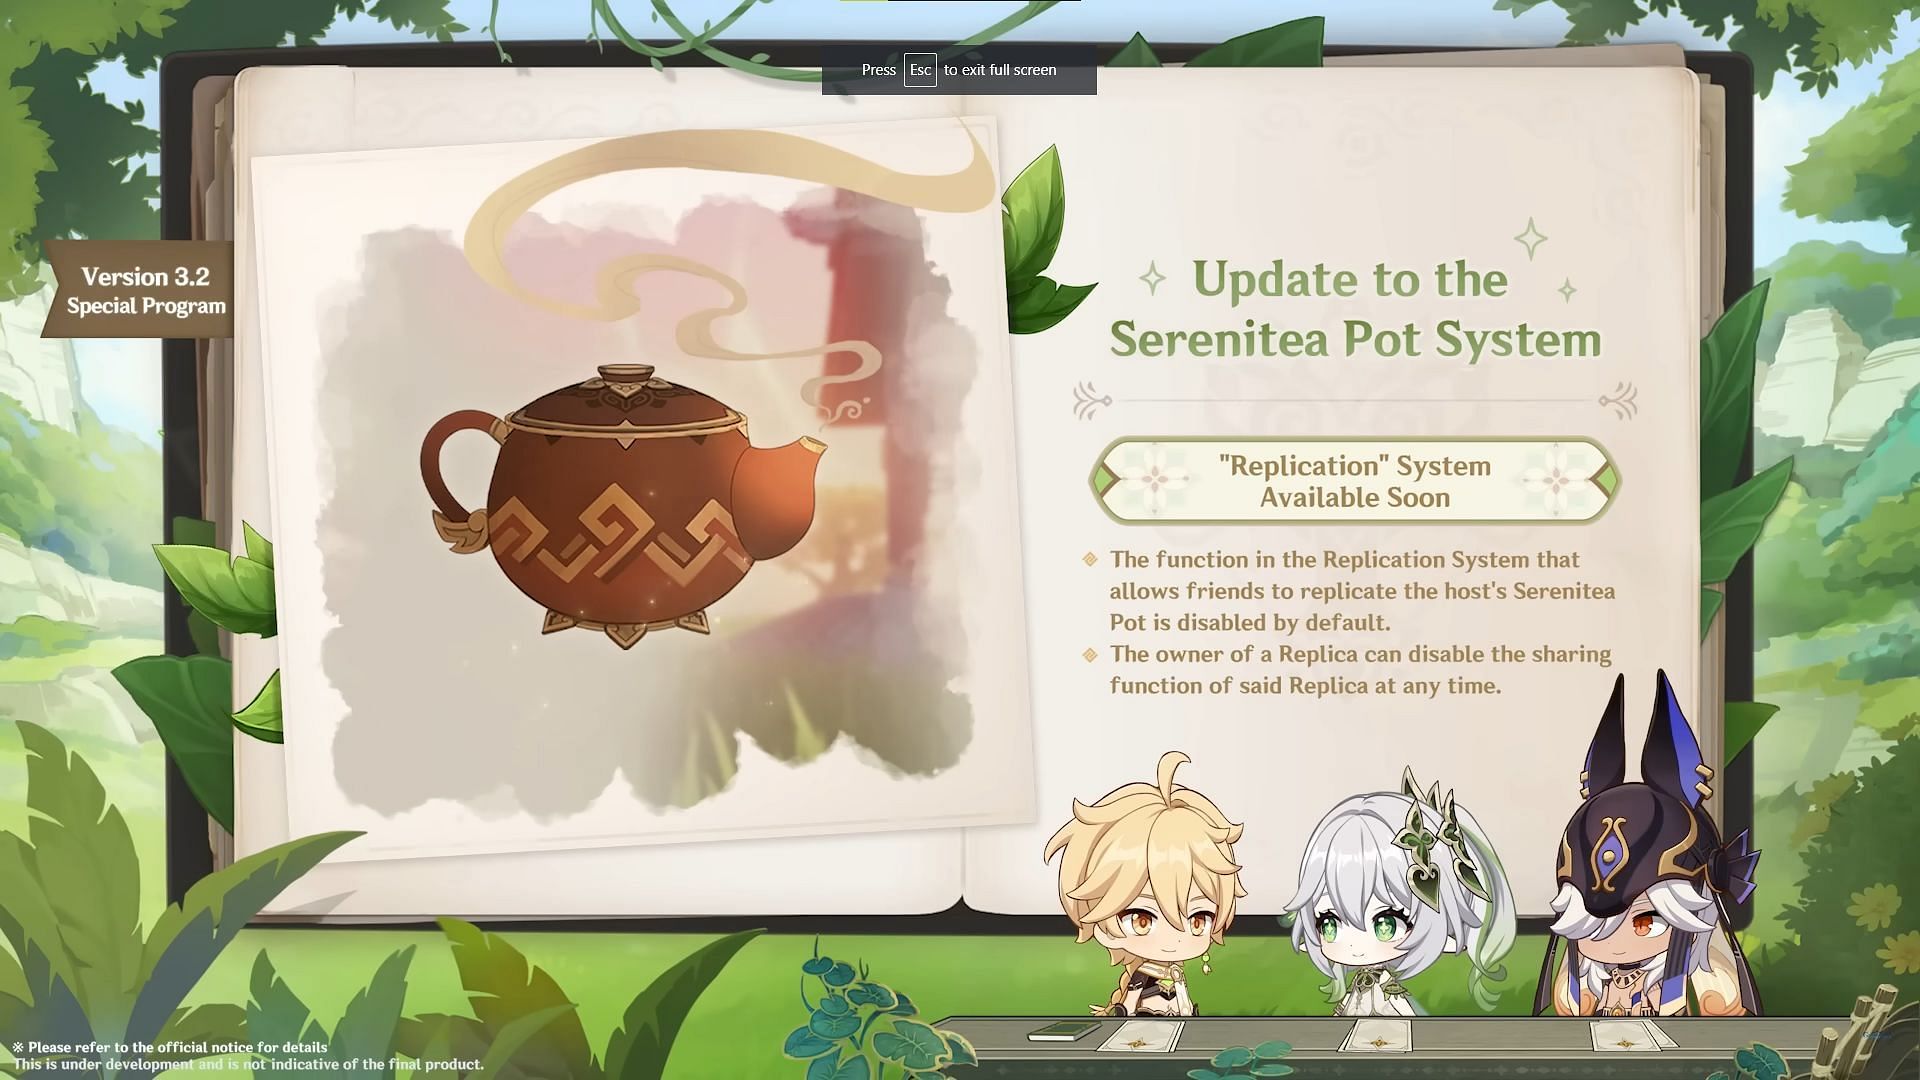 New update on Serenitea Pot system (Image via HoYoverse)